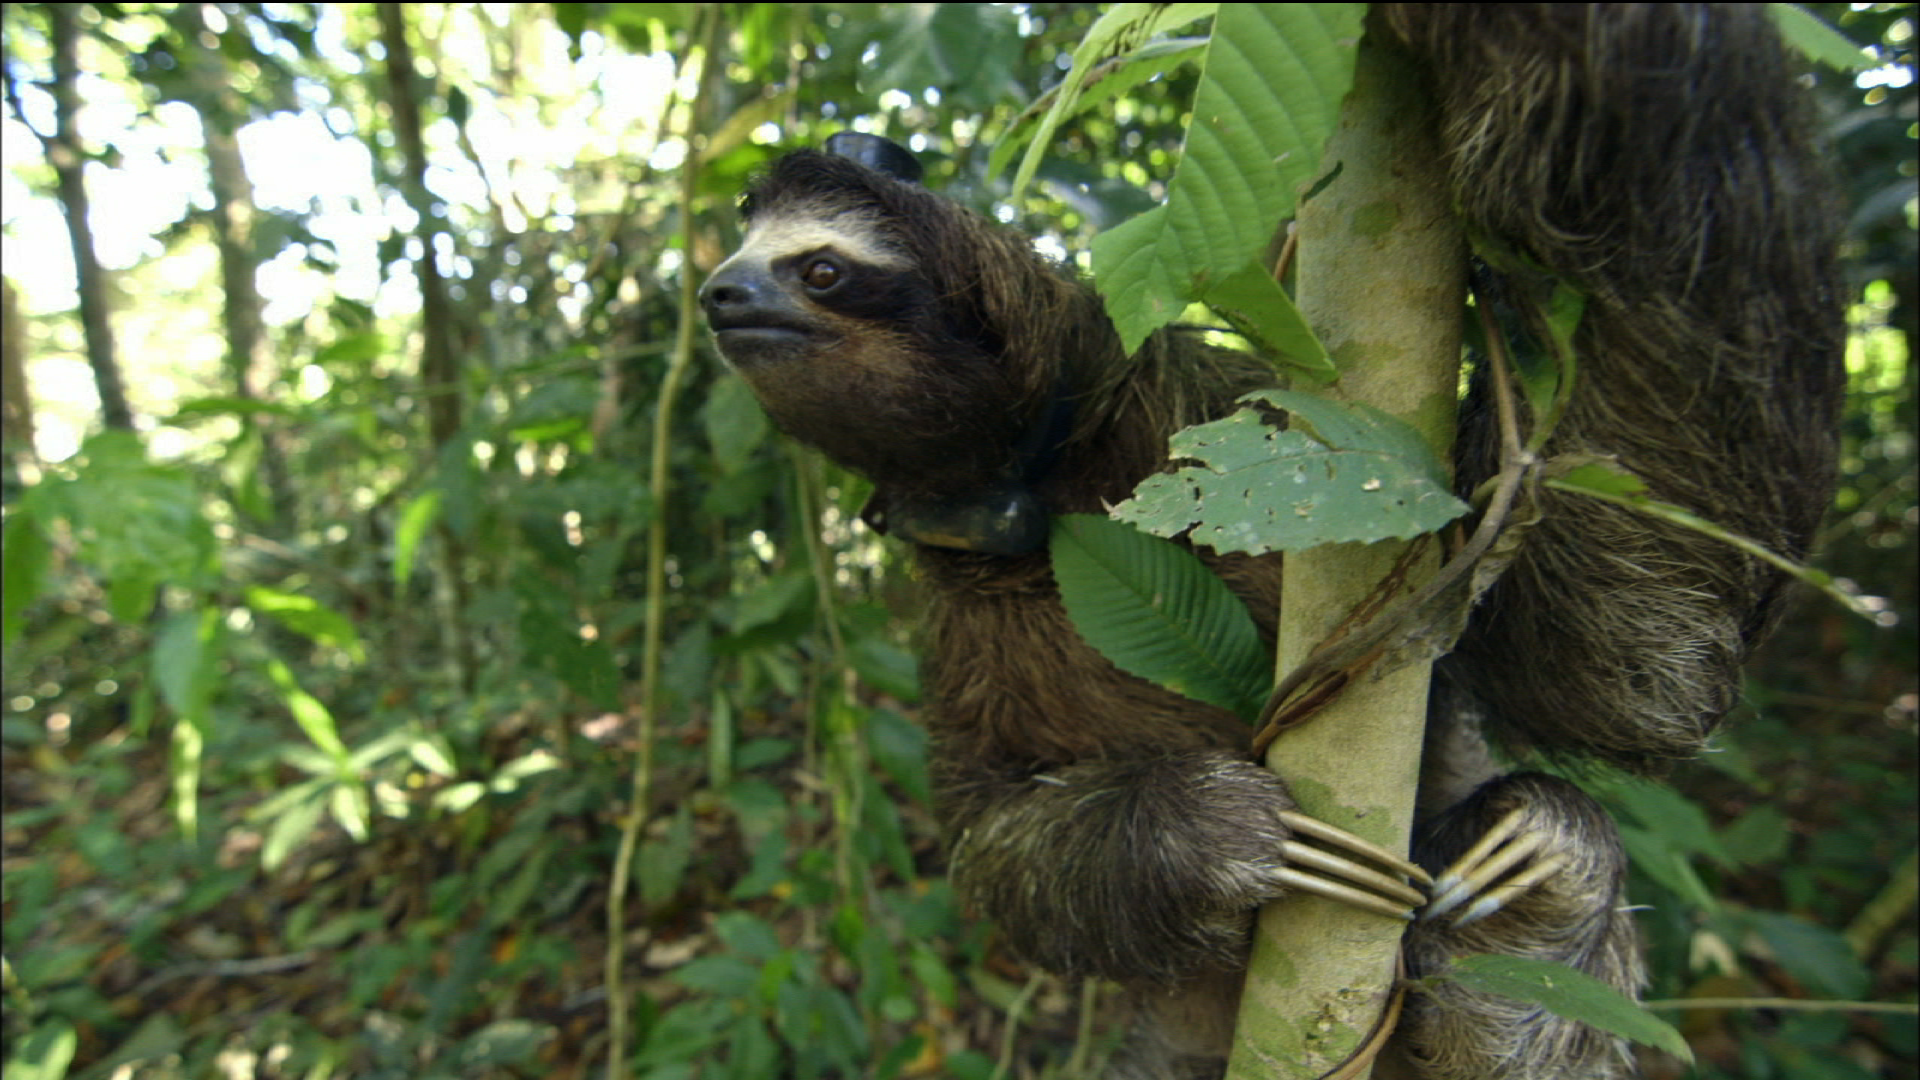 sloth sleeping in tree